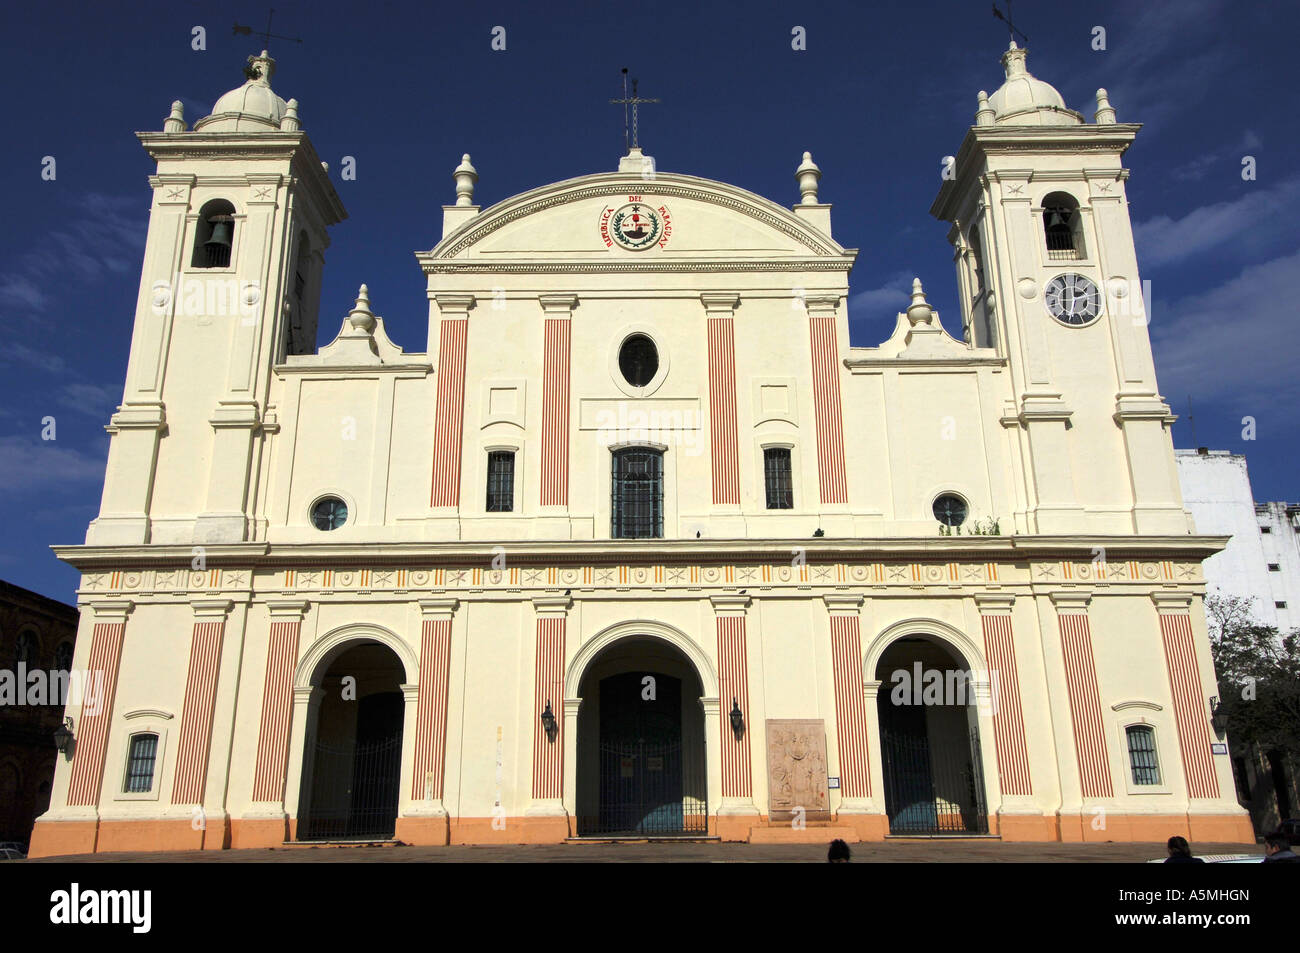 Asuncion Kathedrale Südamerika Südamerika America del Sud Sudamerica Latinoamerica Lateinamerika Paraguay Republica del Parag Stockfoto